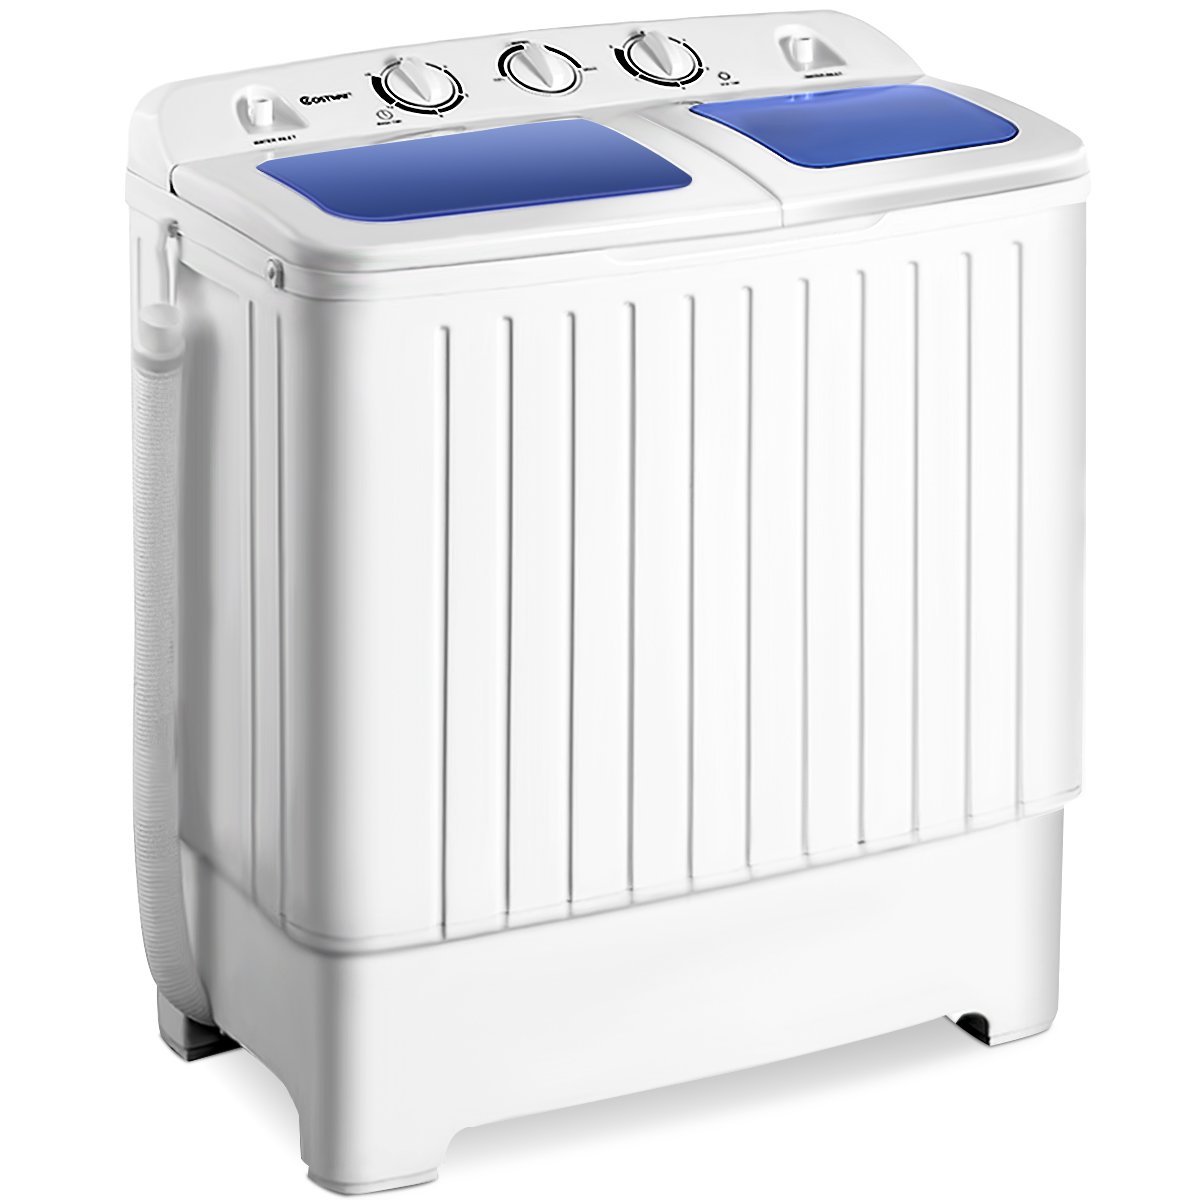 Review of Giantex Portable Mini Compact Twin Tub Washing Machine 17.6lbs